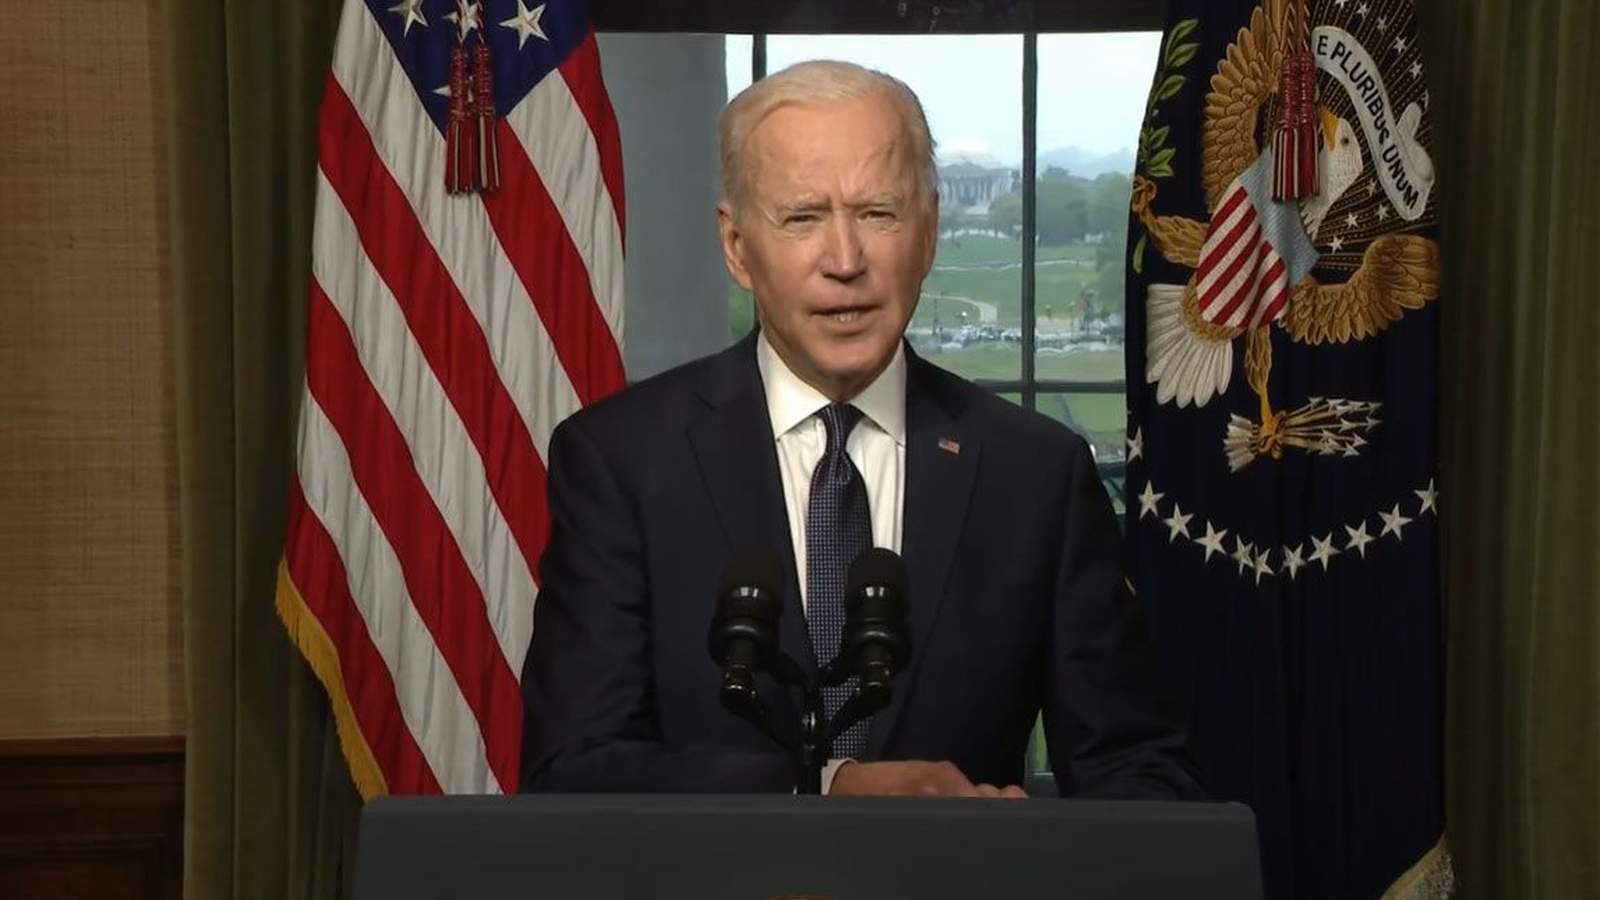 WATCH: President Joe Biden announces withdrawing remaining U.S. troops from Afghanistan